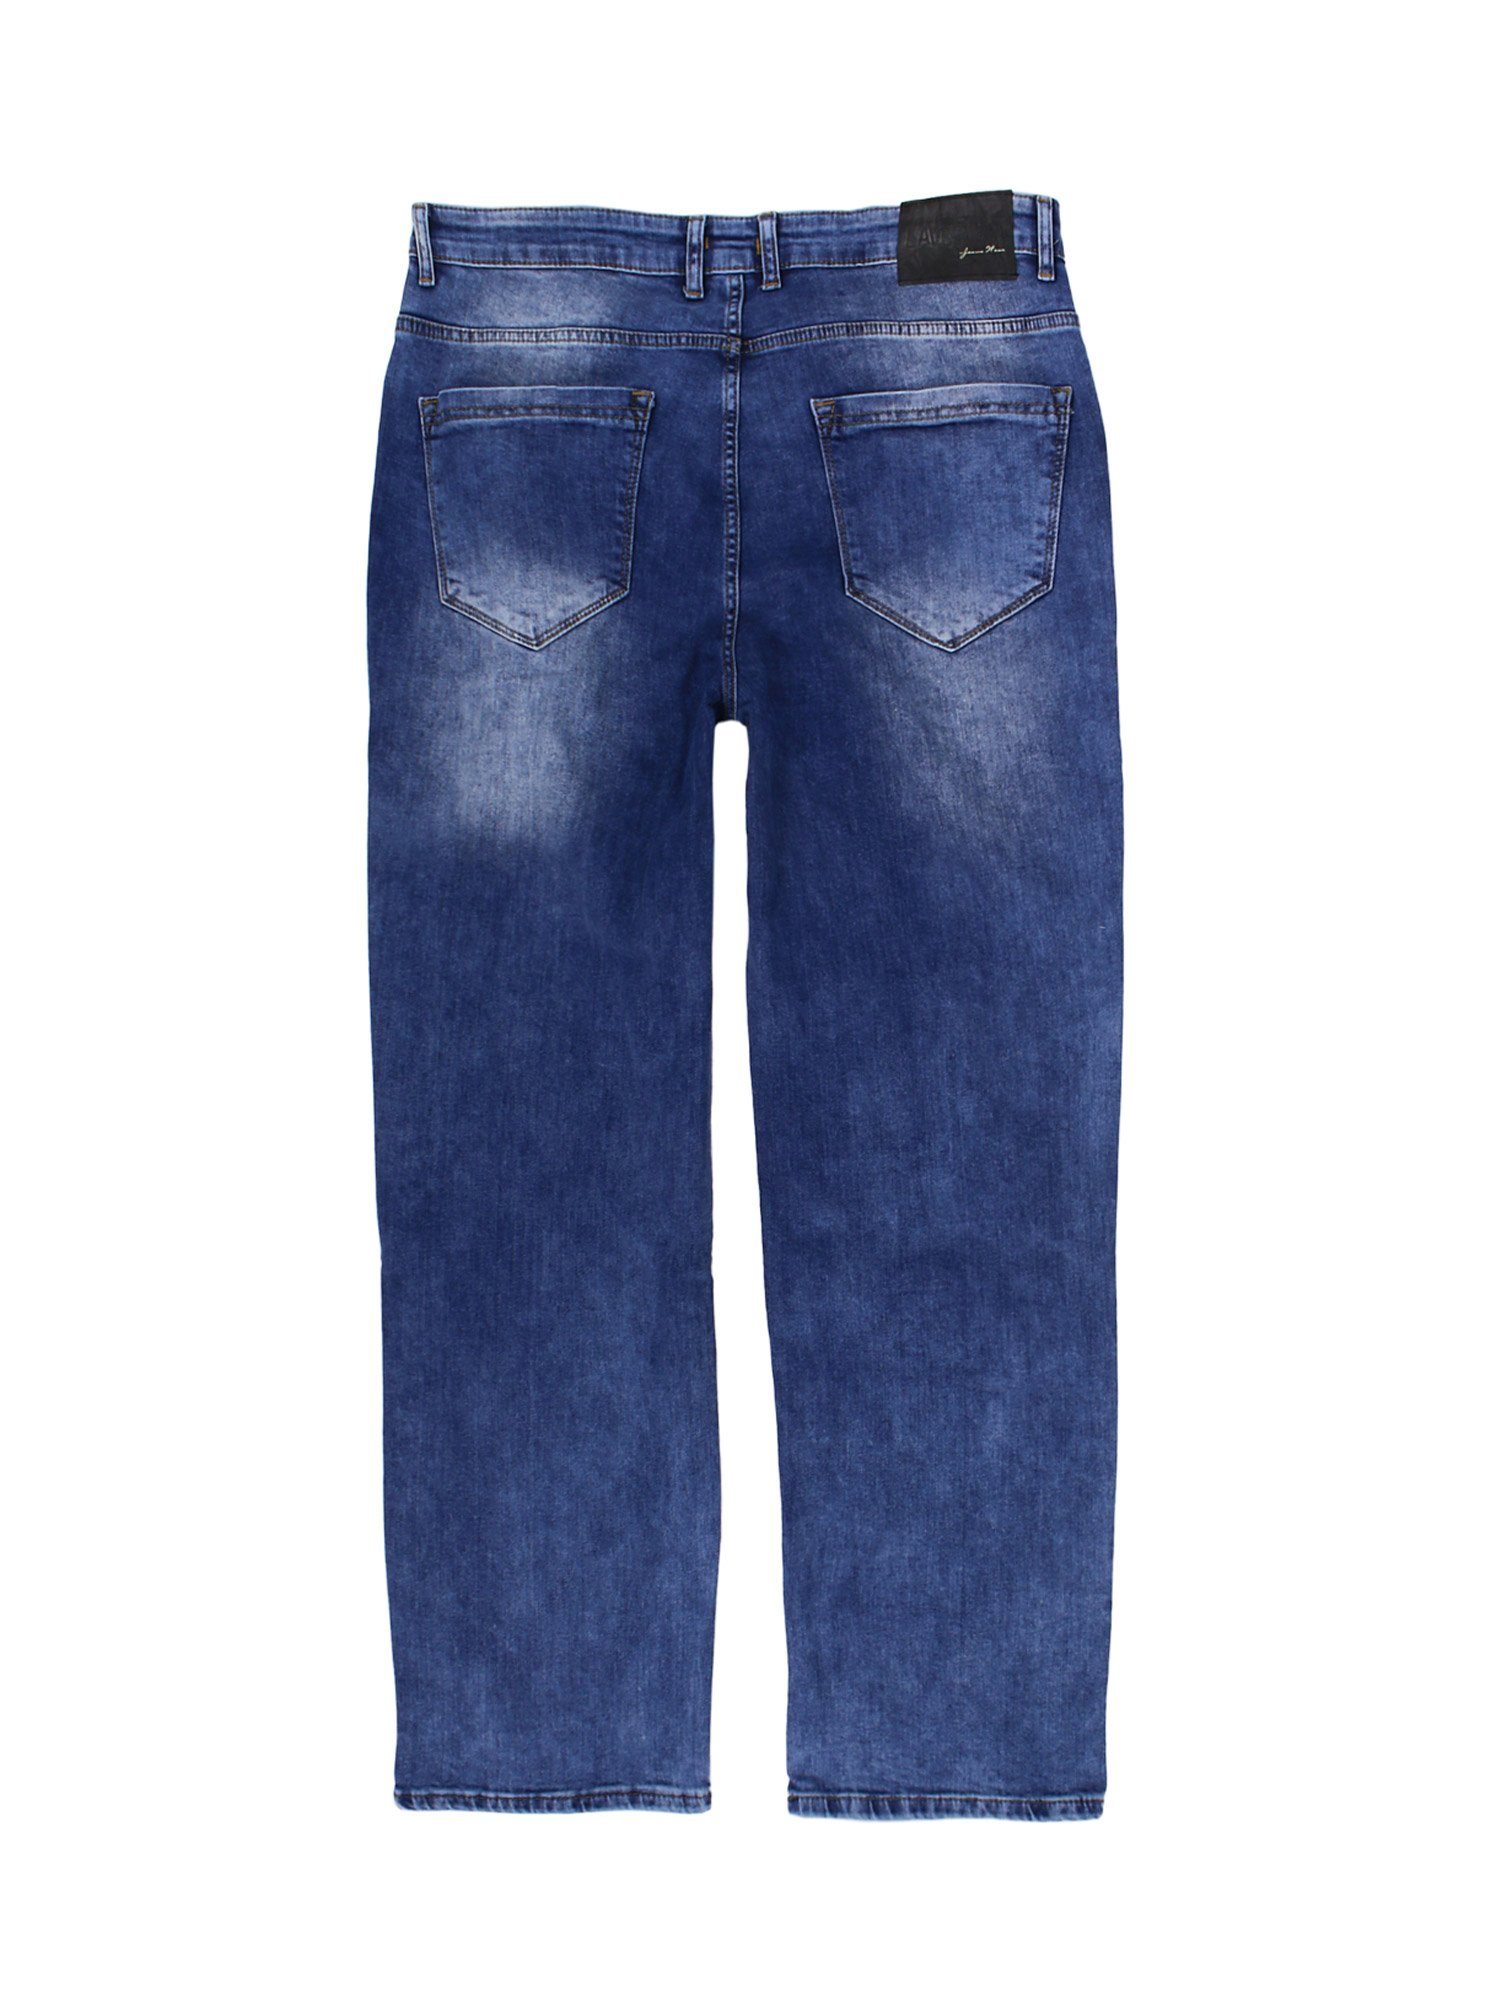 Elasthan LV-501 Herren mit Comfort-fit-Jeans Lavecchia Stretch Jeanshose stoneblau Übergrößen